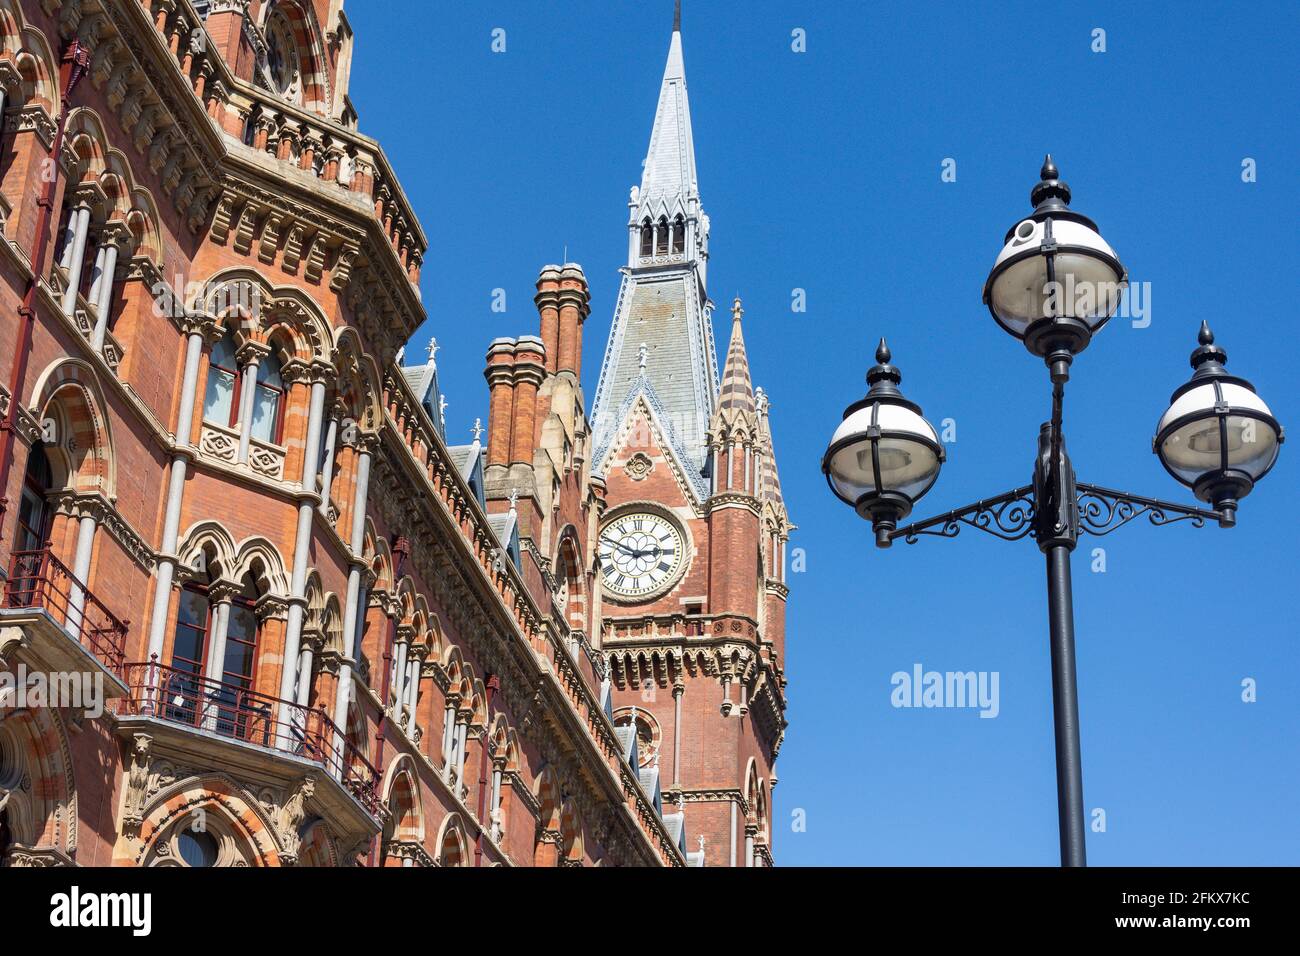 Clock tower, St.Pancras International Railway Station, Euston Road, King's Cross, London Borough of Camden, Greater London, England, United Kingdom Stock Photo